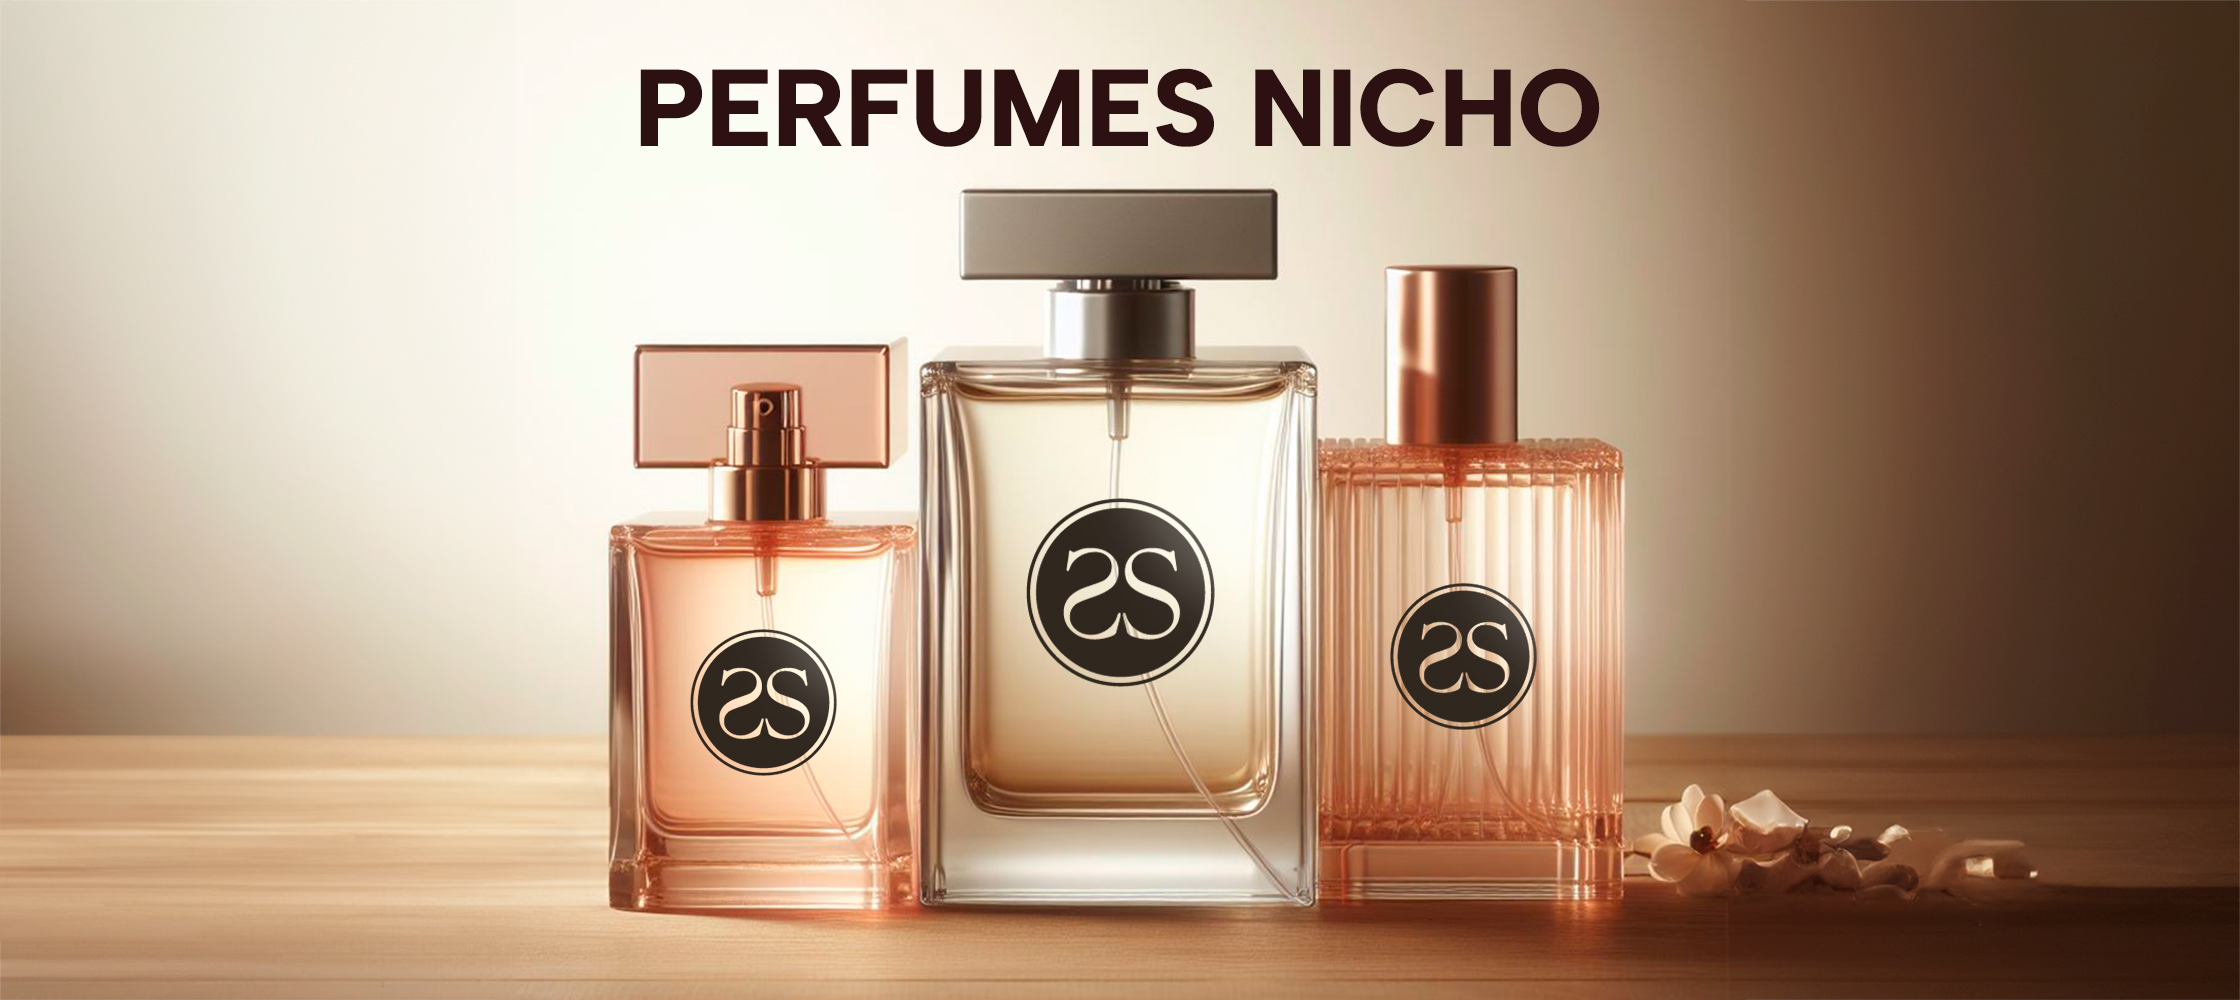 Fabrica de Perfumes Nicho